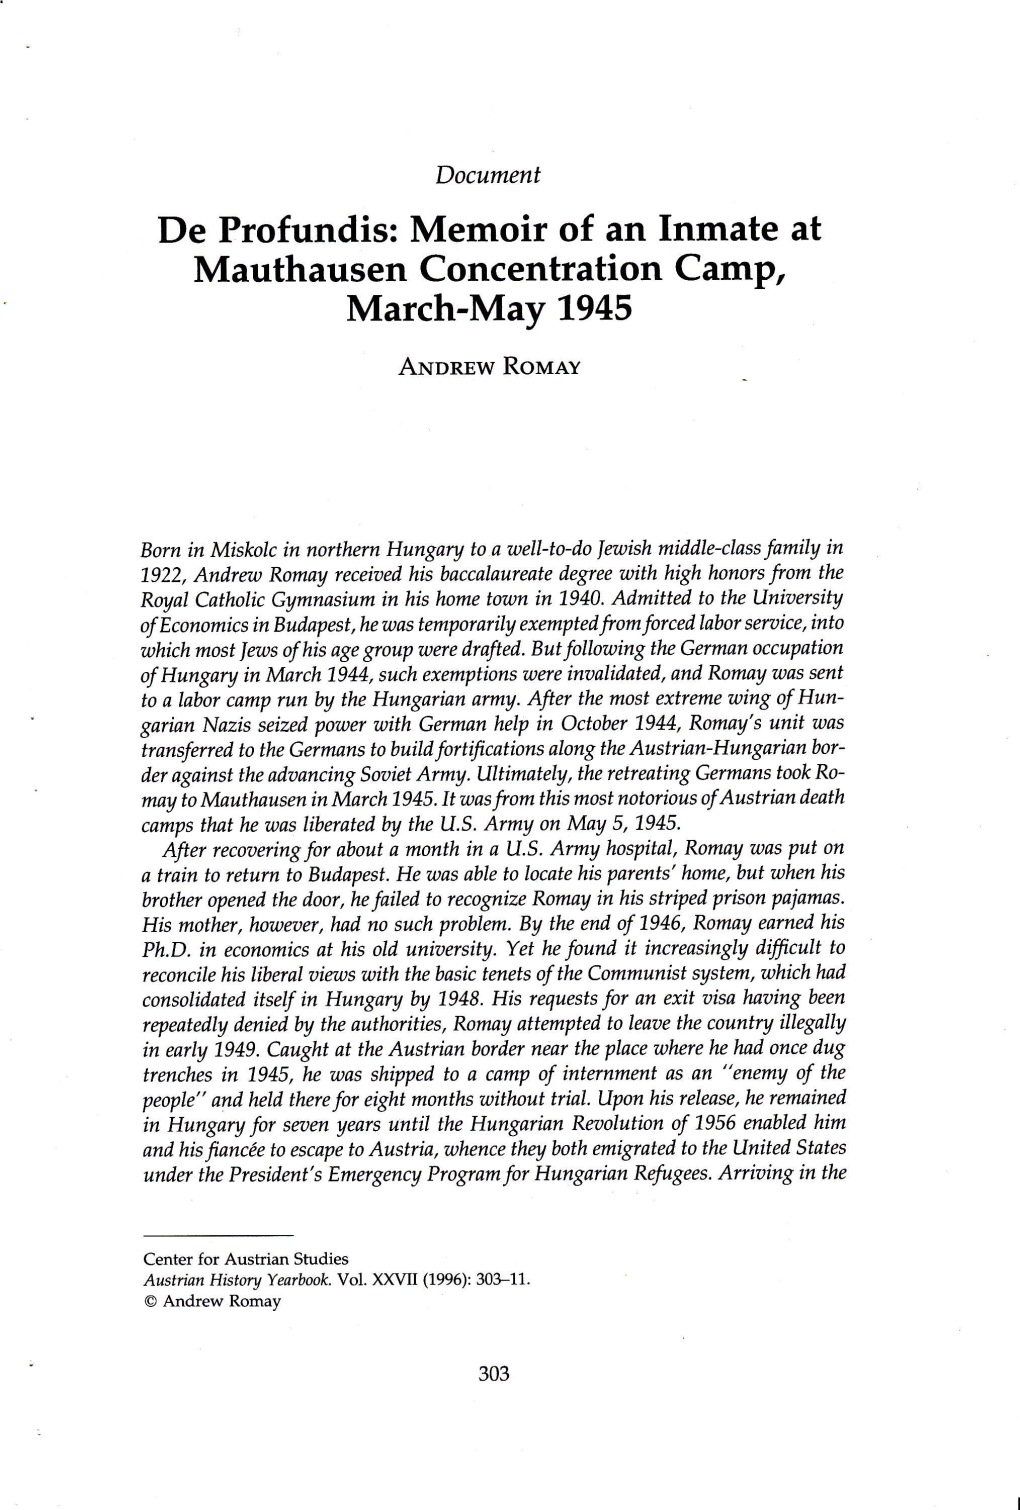 De Profundis-Mauthausen Memoir [PDF]